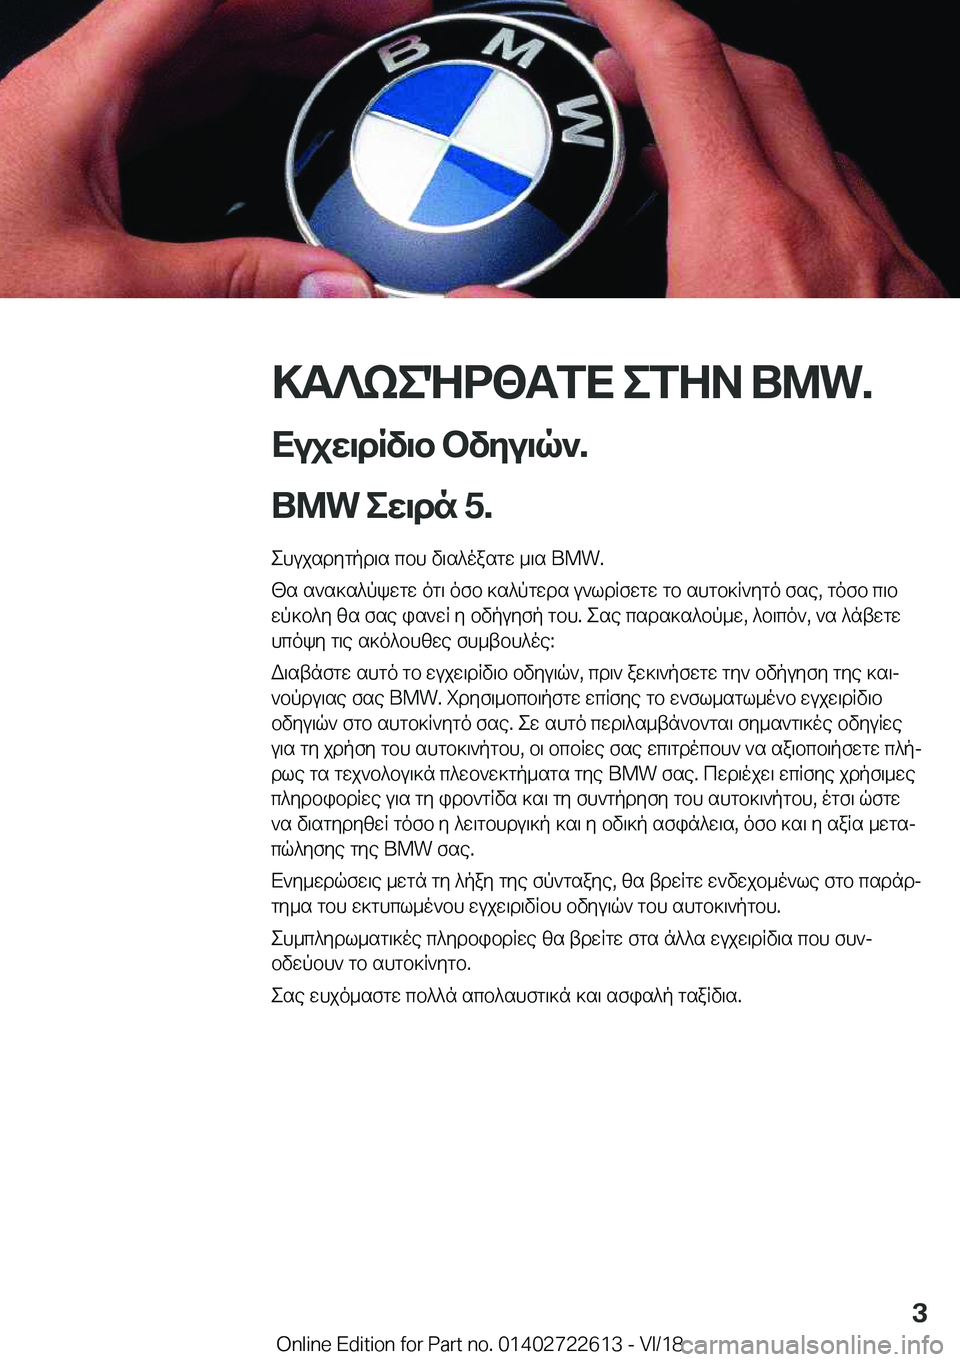 BMW 5 SERIES 2019  ΟΔΗΓΌΣ ΧΡΉΣΗΣ (in Greek) >T?keNd<TfX�efZA��B�M�W�.
Xujw\dRv\b�bvyu\q`�.
�B�M�W�ew\dn��5�. ehujsdygpd\s�cbh�v\s^oasgw�_\s��B�M�W�.
[s�s`s]s^pk